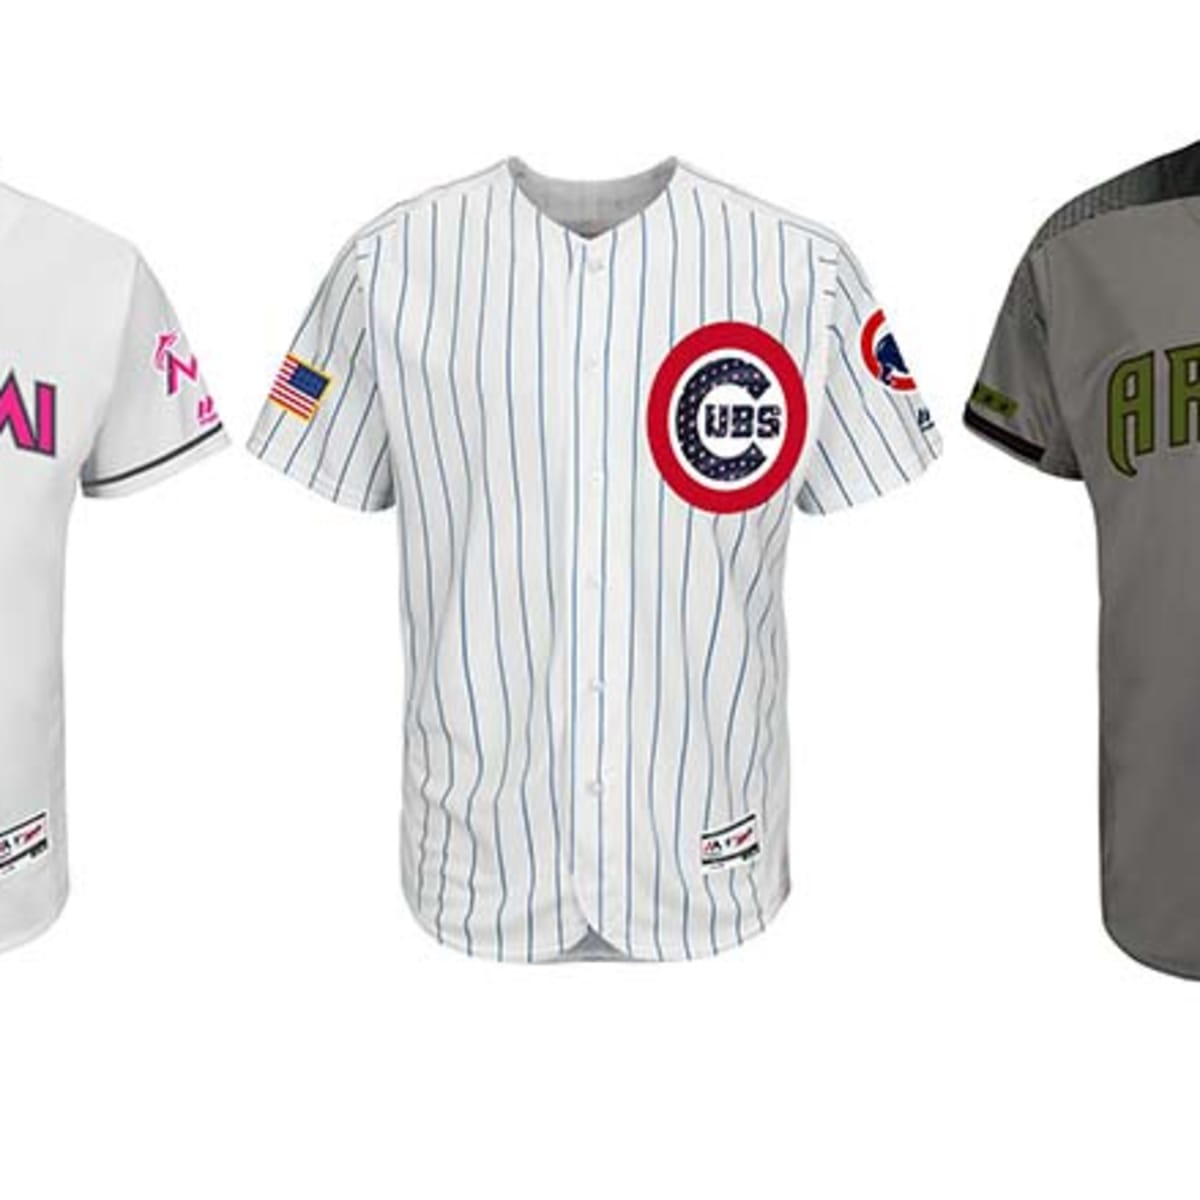 2017 MLB special event uniforms unveiled